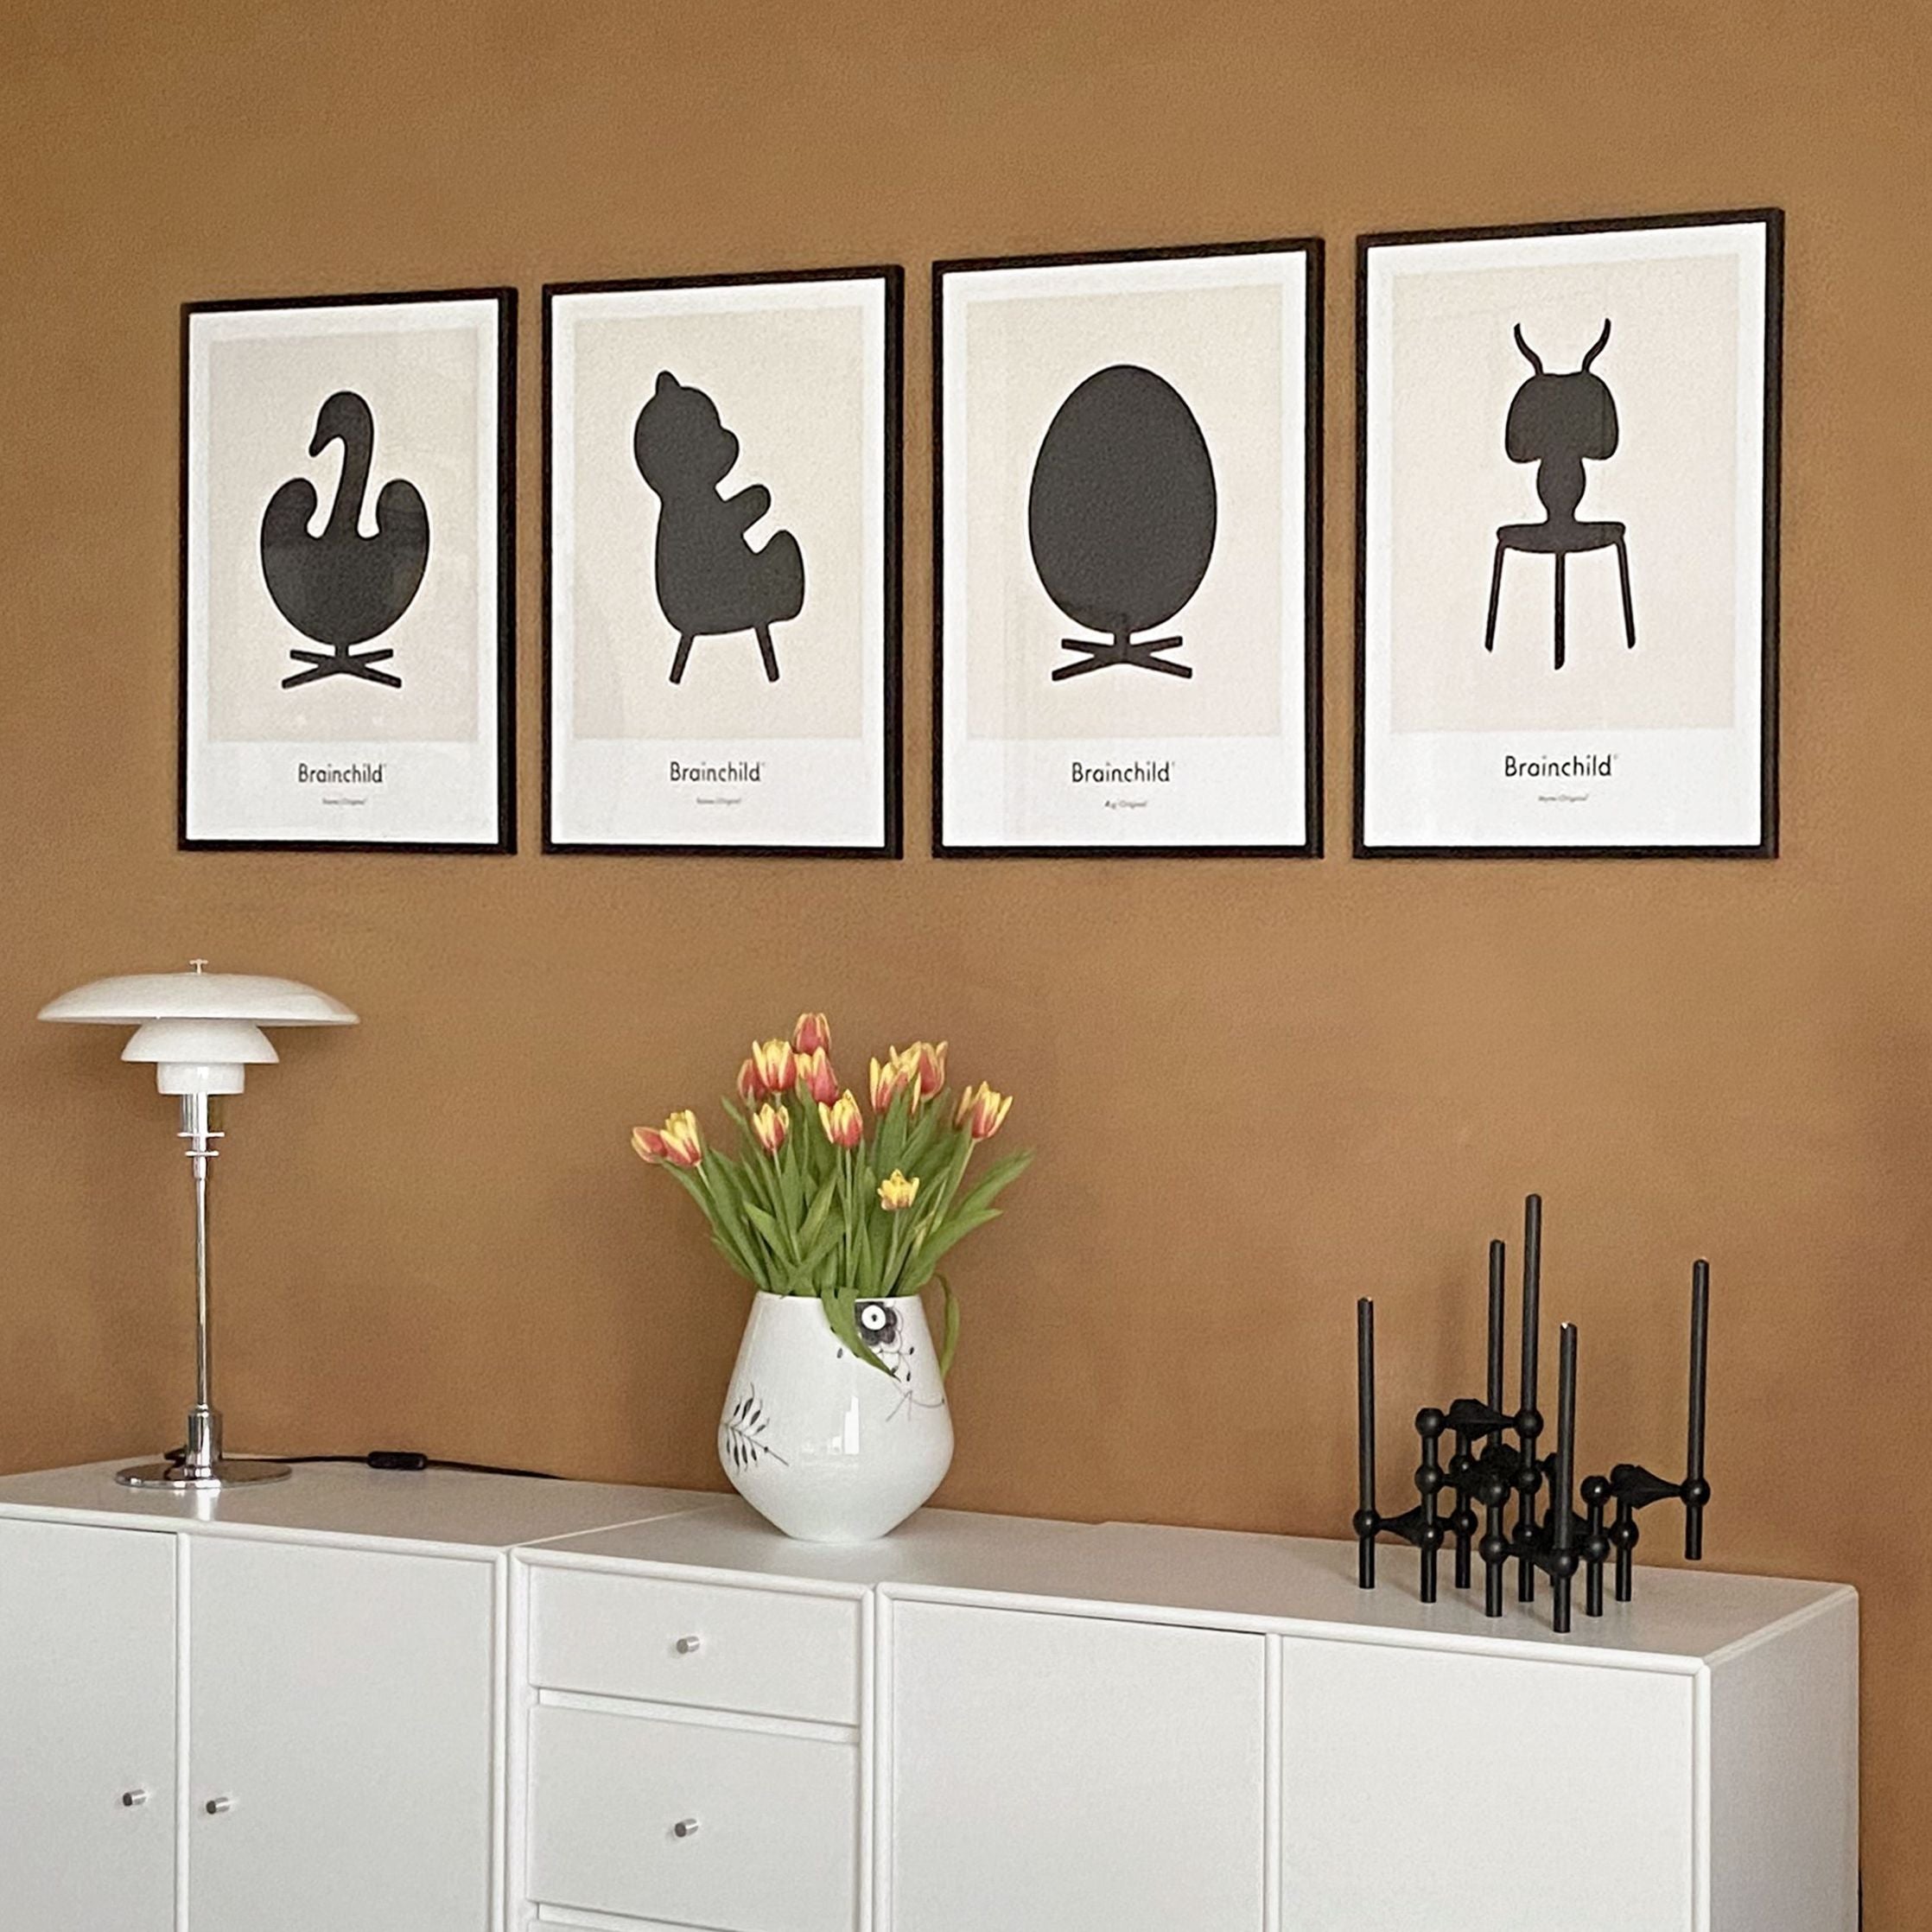 Brainchild Swan Design Icon Poster, koperen frame A5, grijs